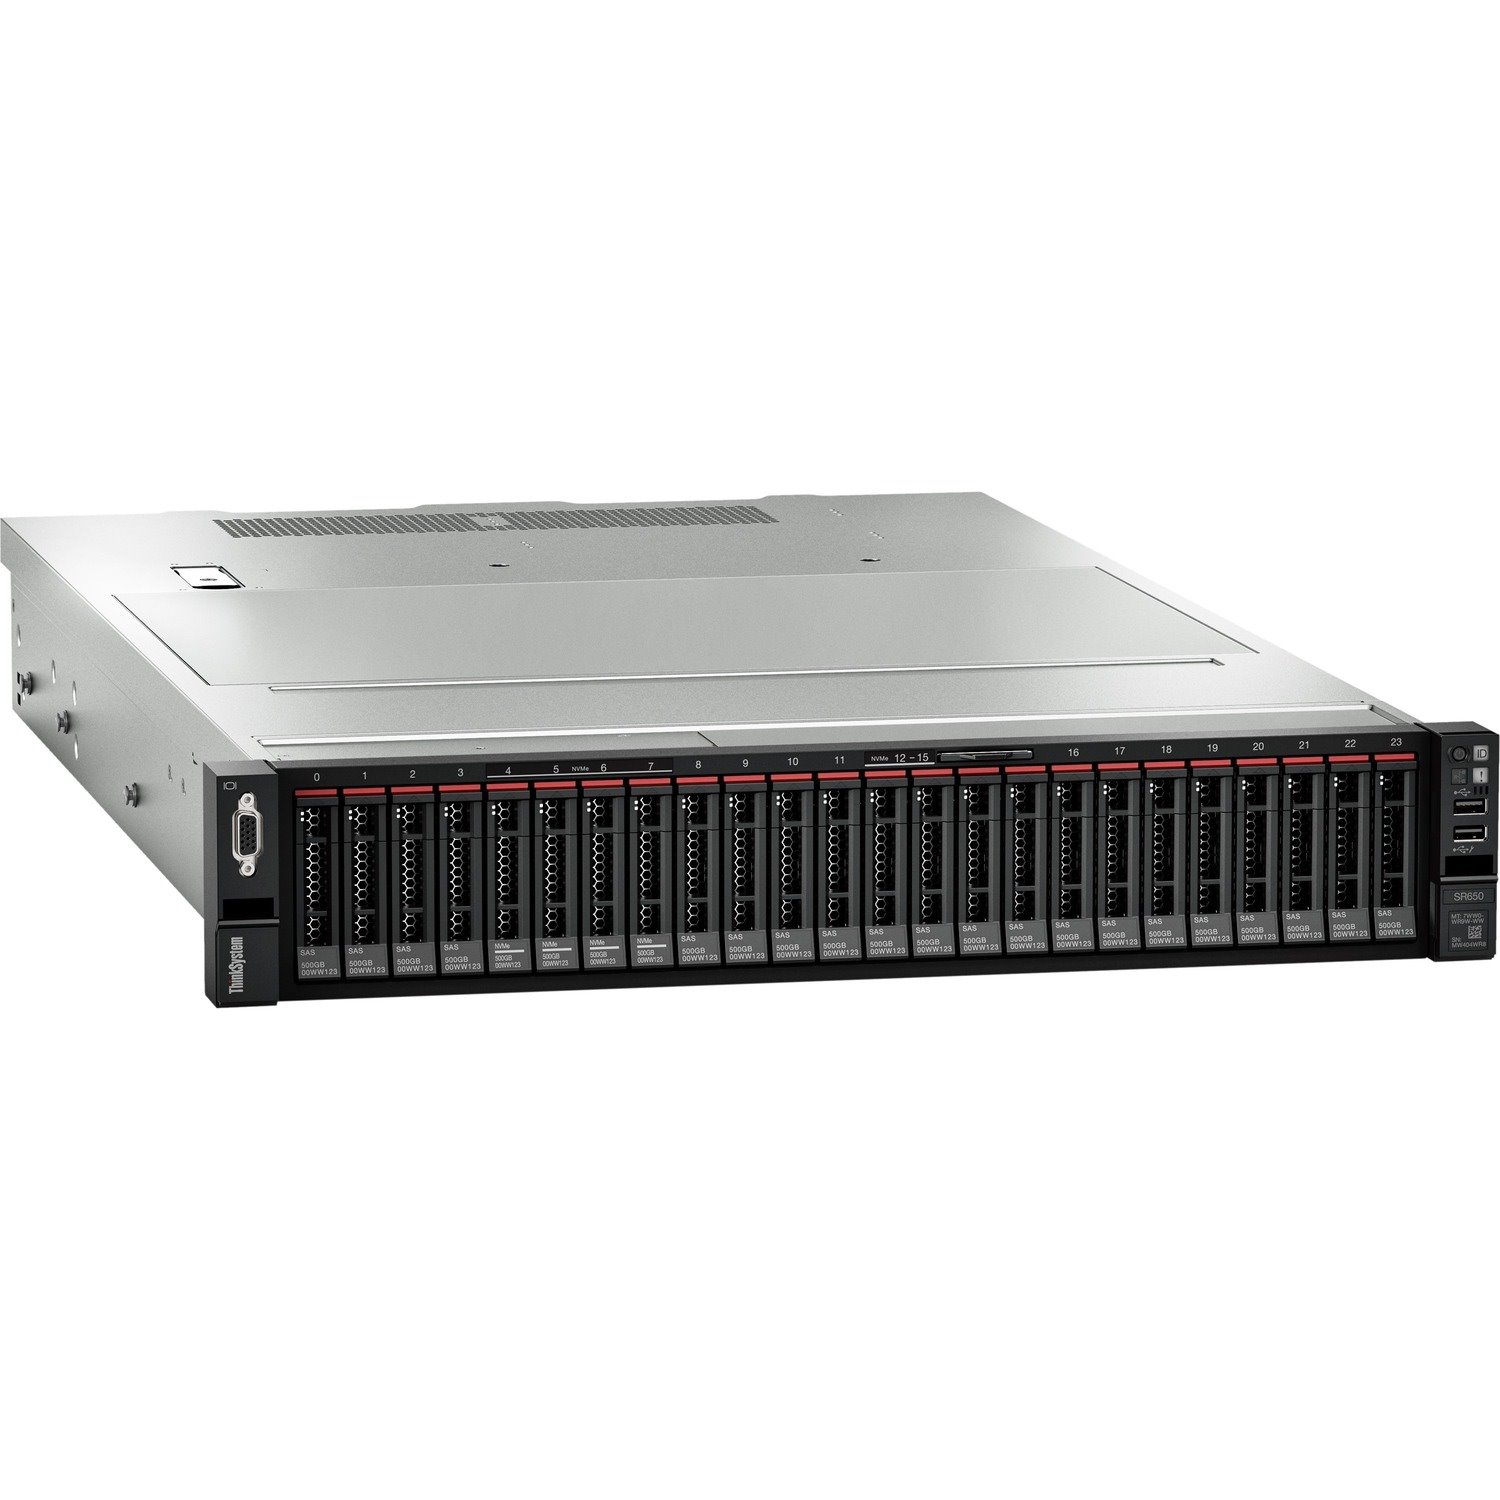 Lenovo ThinkSystem SR650 7X06A05DAU 2U Rack Server - 1 x Intel Xeon Gold 5120 2.20 GHz - 16 GB RAM - 12Gb/s SAS, Serial ATA/600 Controller